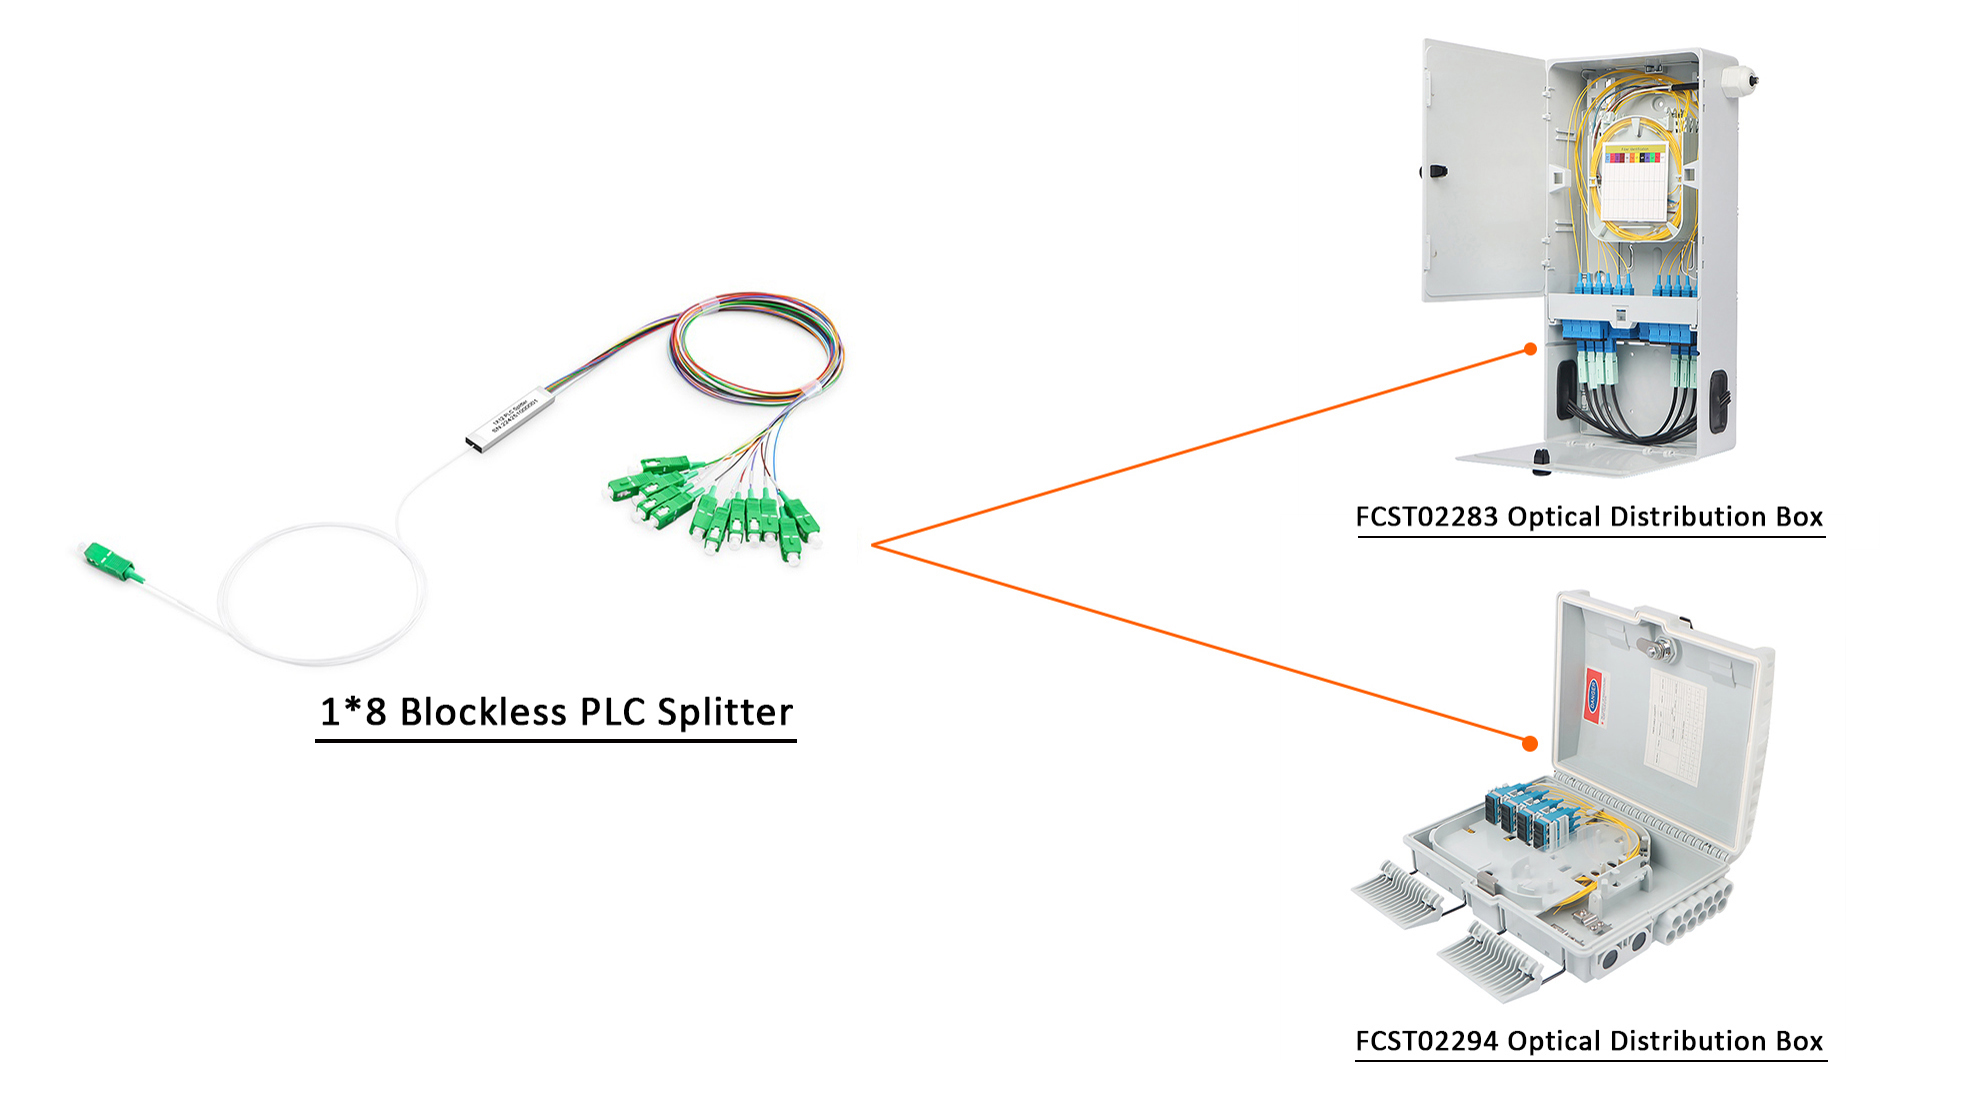 Blockless PLC Splitter